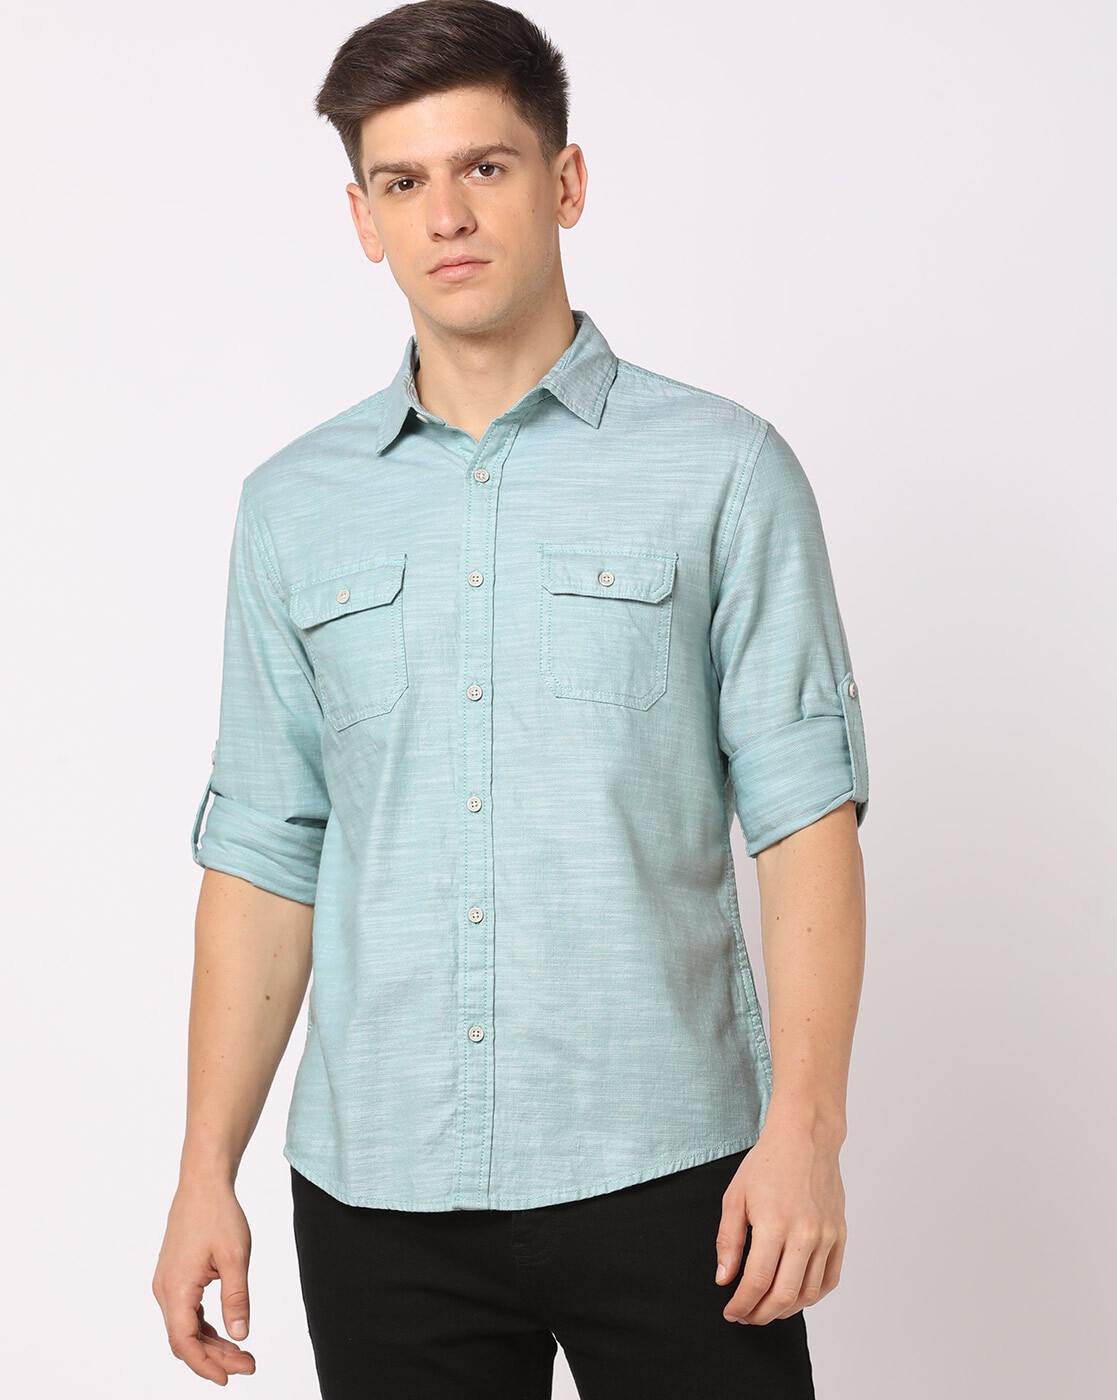 Men's plain hooded t-shirt - light blue S1376 | Ombre.com - Men's clothing  online